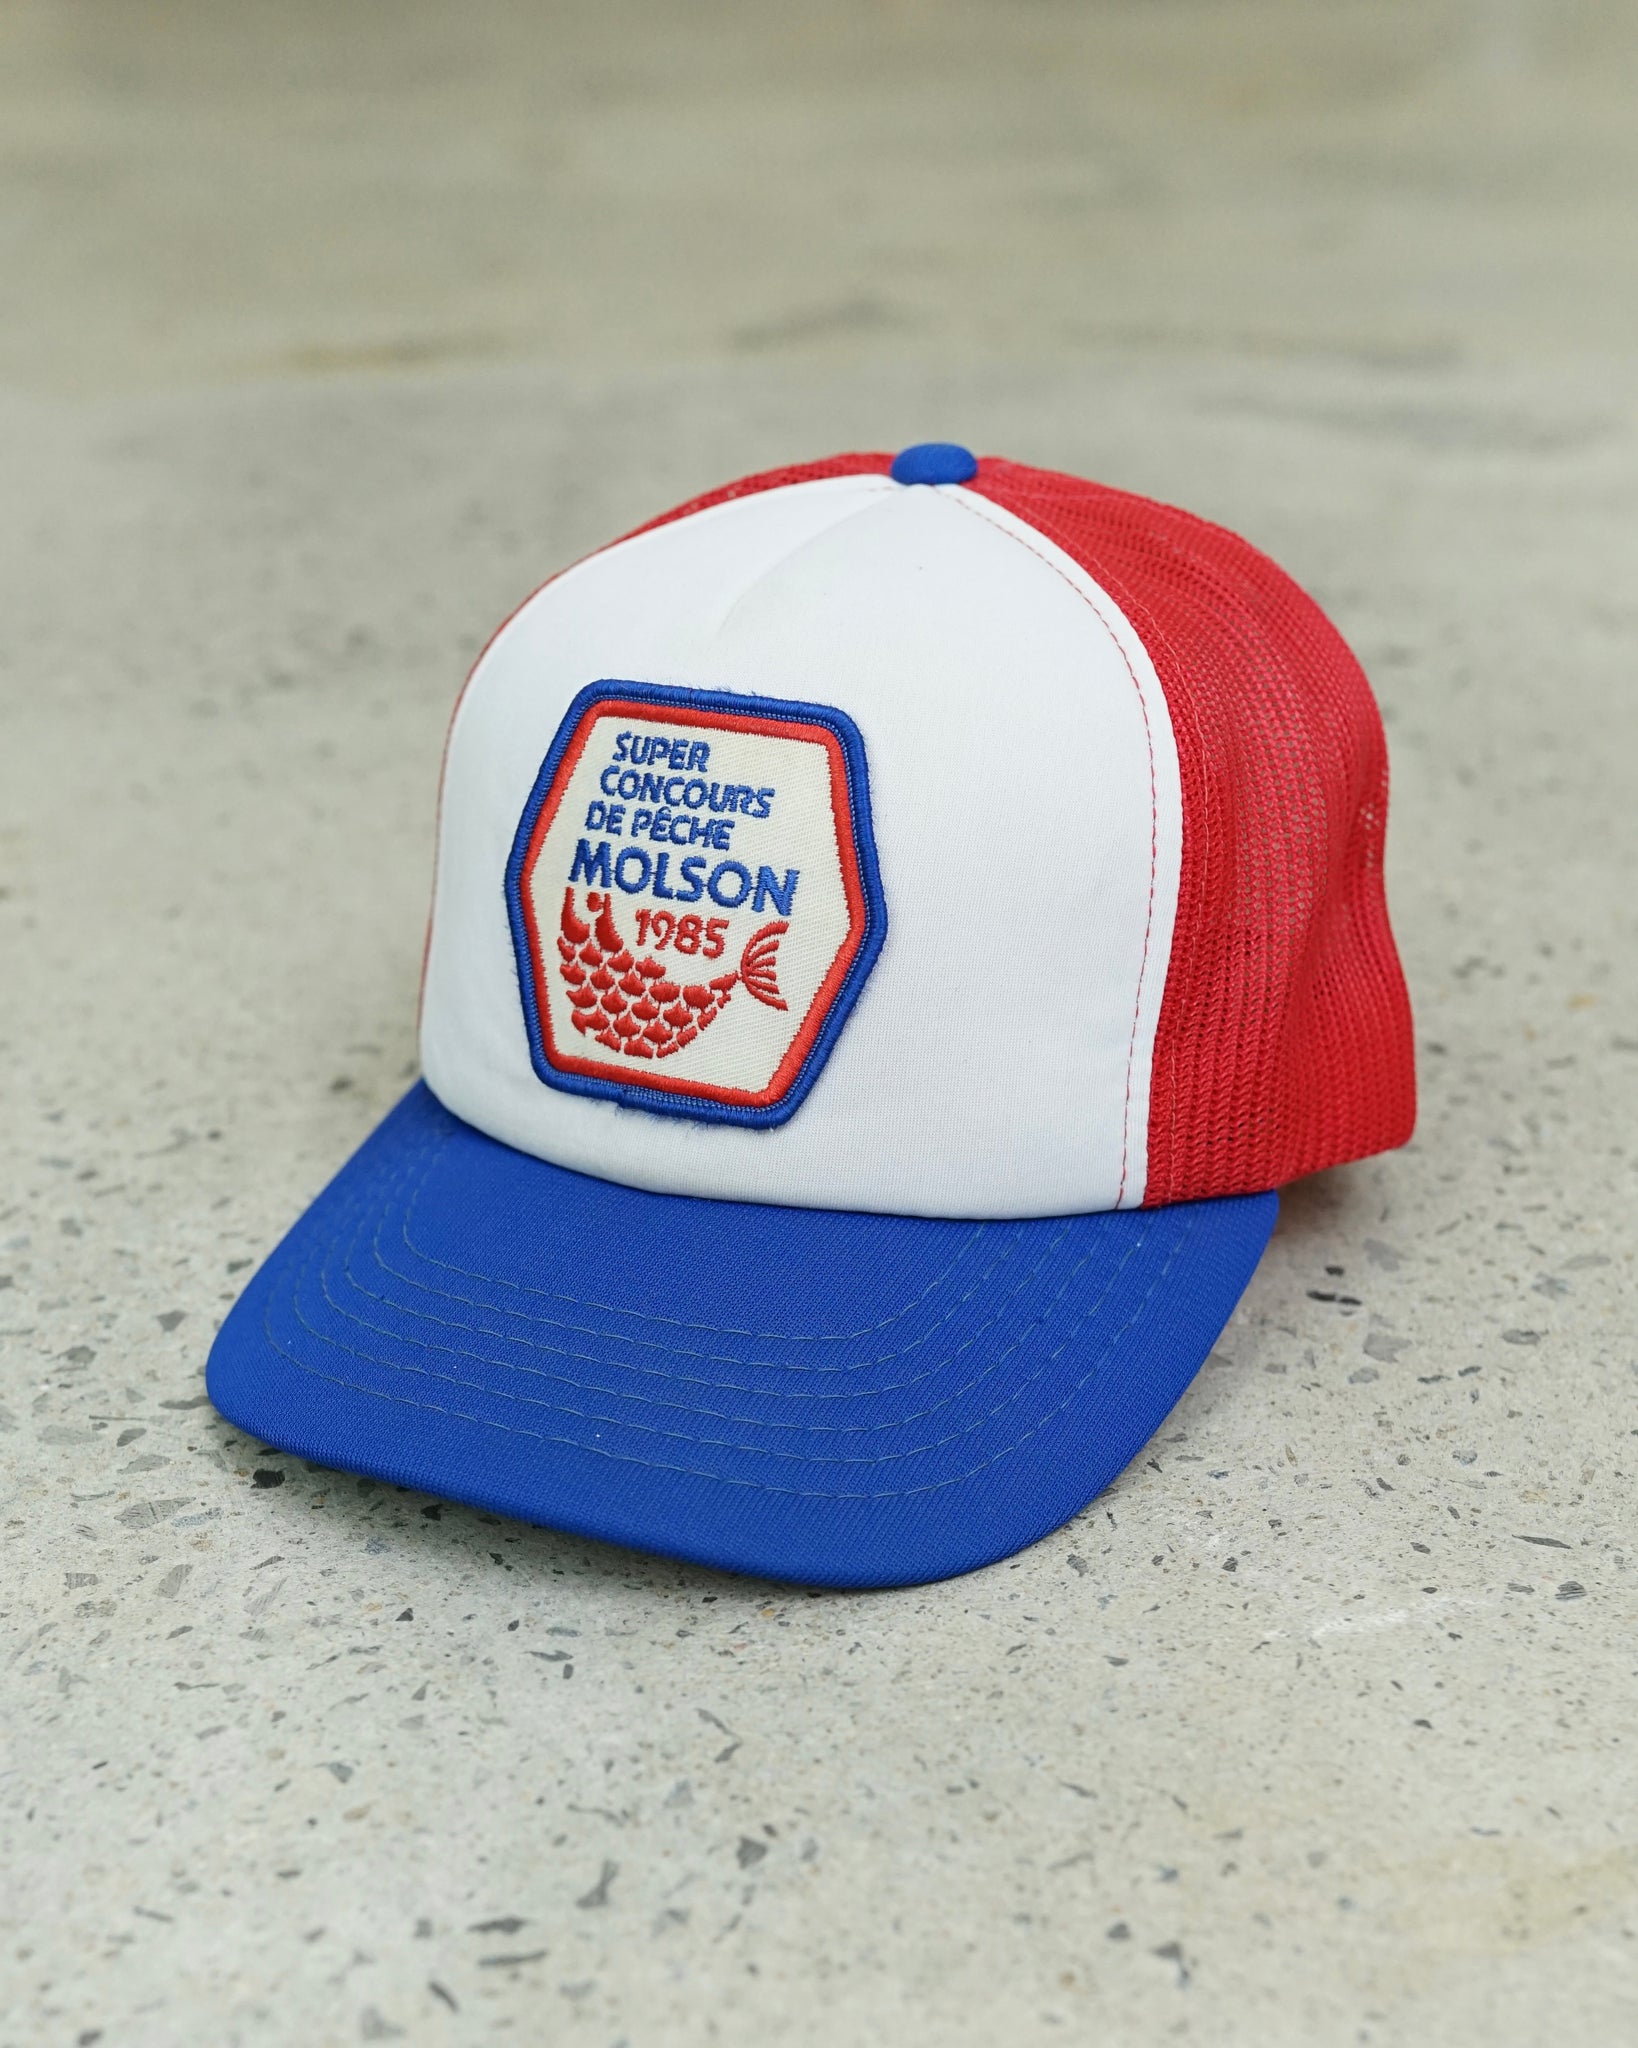 molson 1985 fishing contest trucker hat